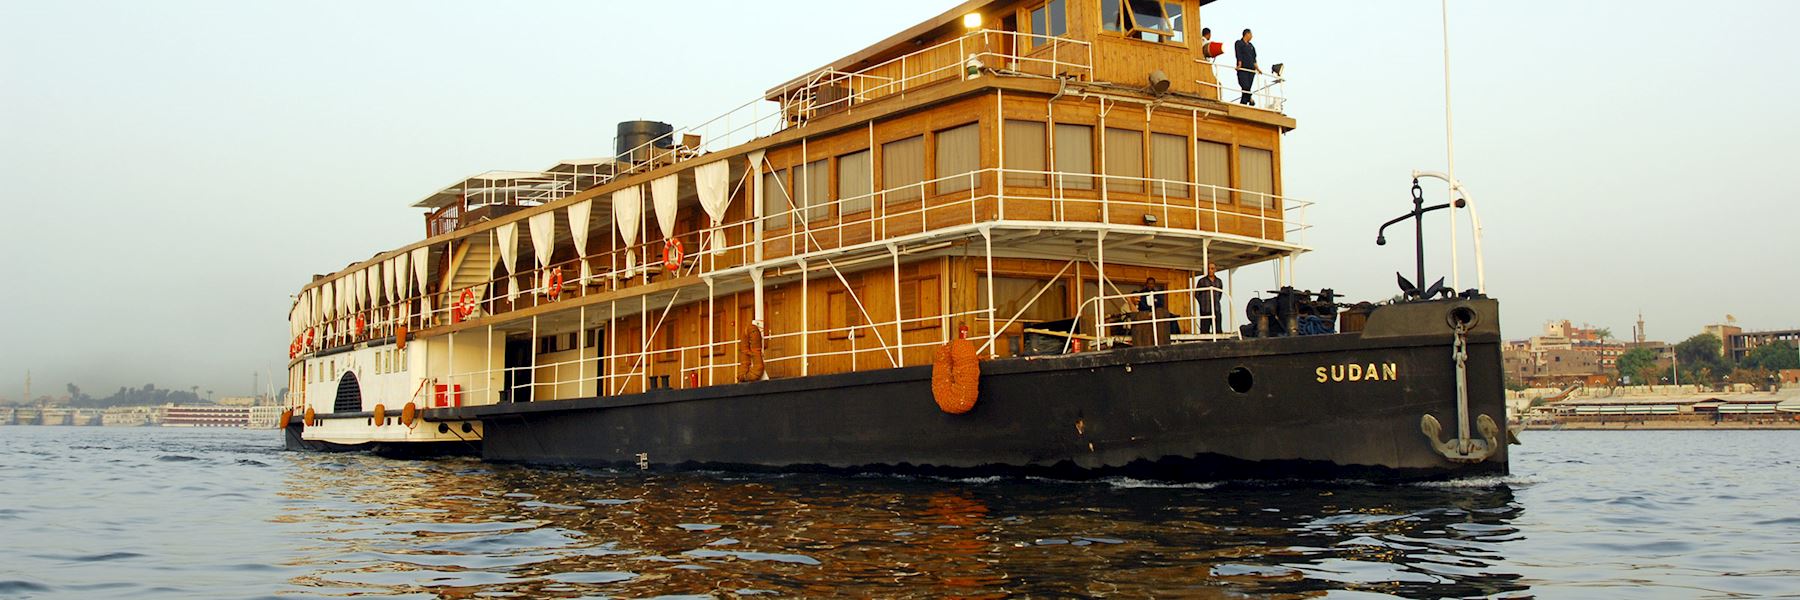 Steam Ship Sudan | Egypt Cruises | Audley Travel